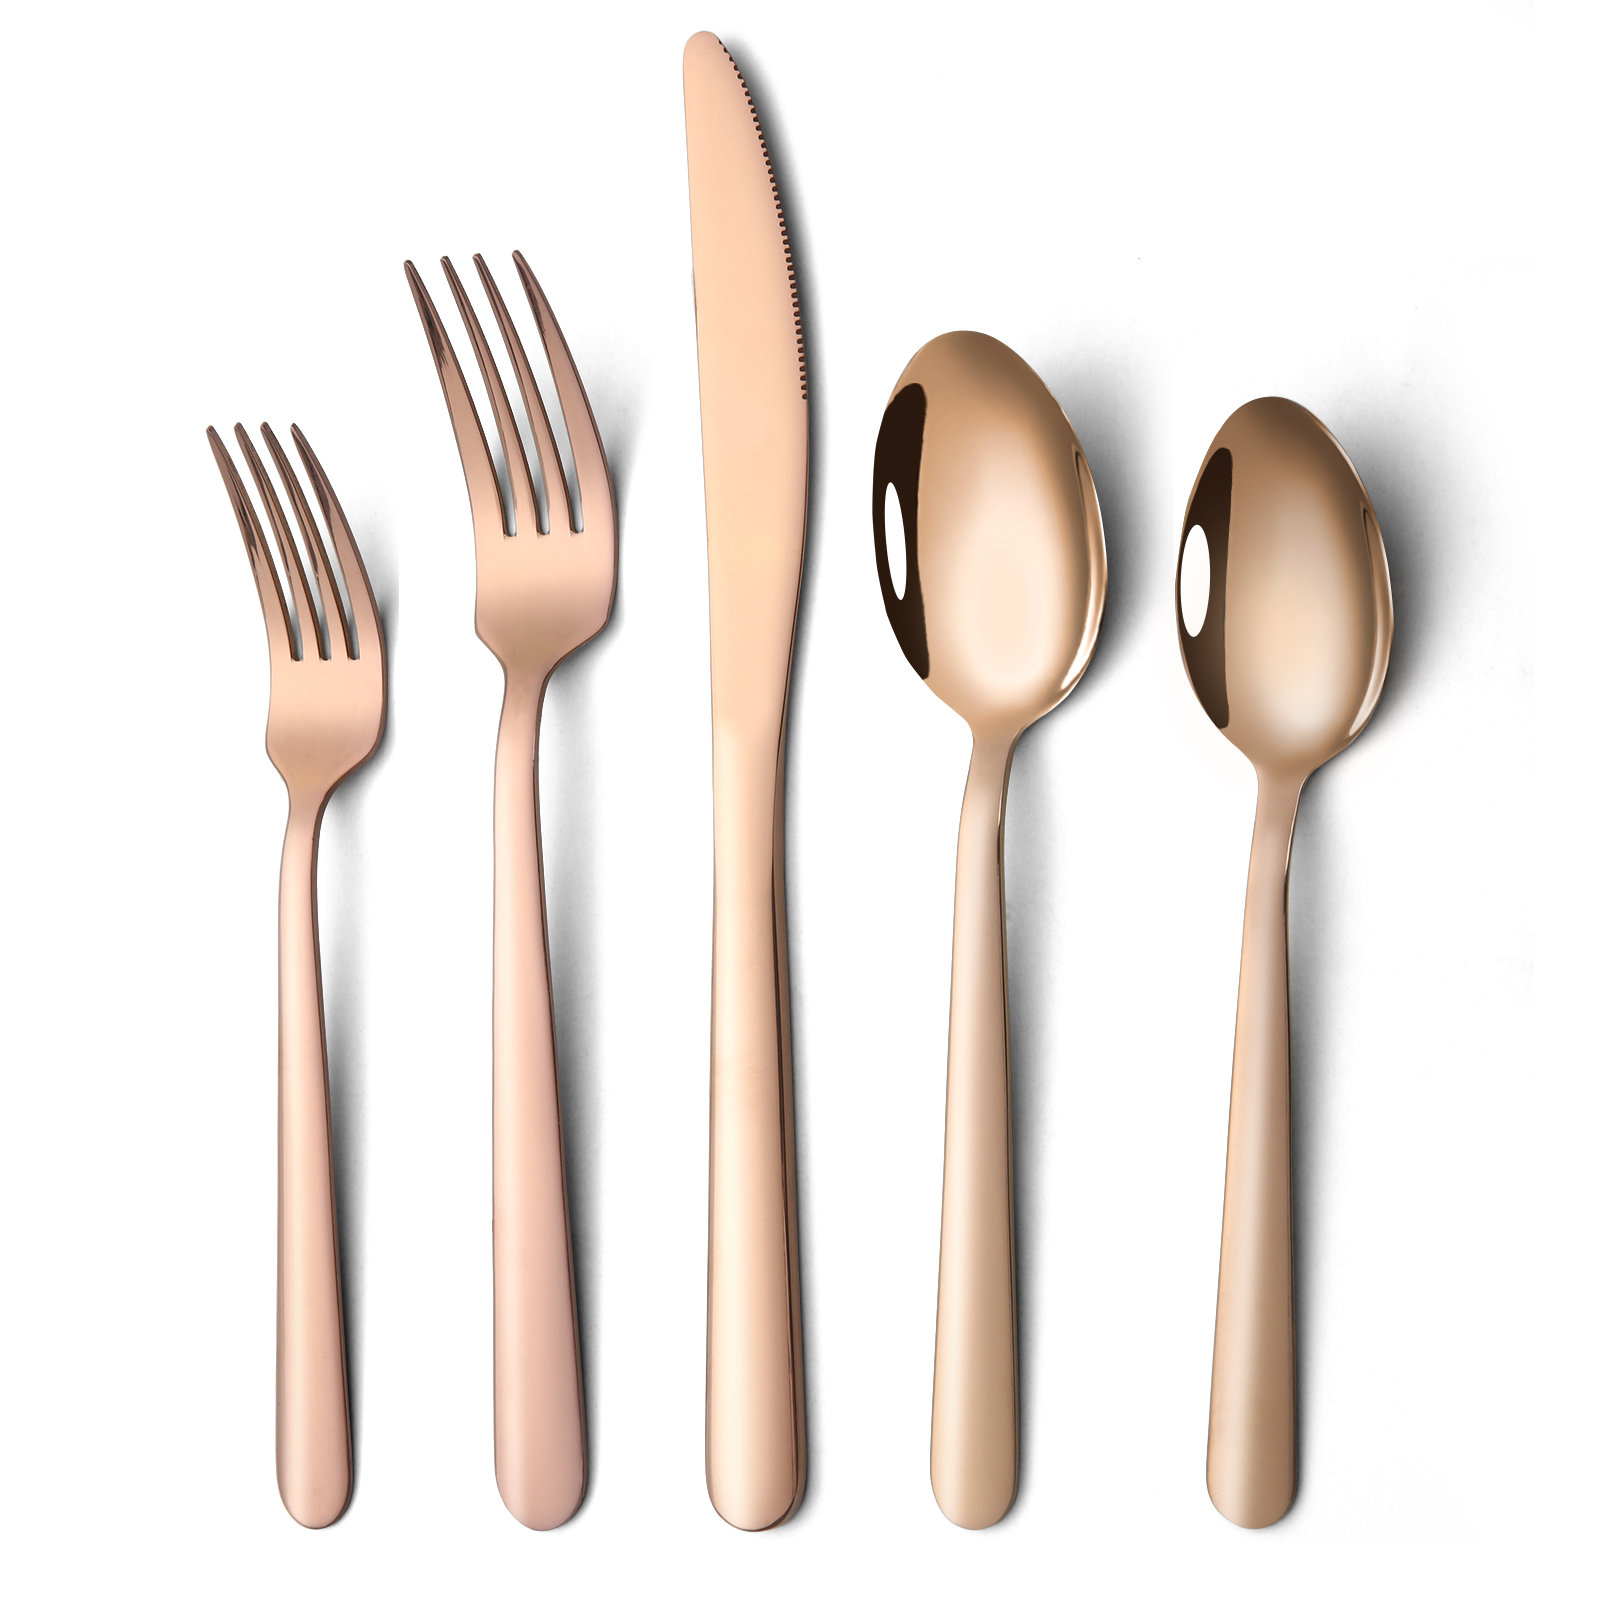 3 Multicolour Fork Set Cutlery, Kitchen Wear, Lightweight